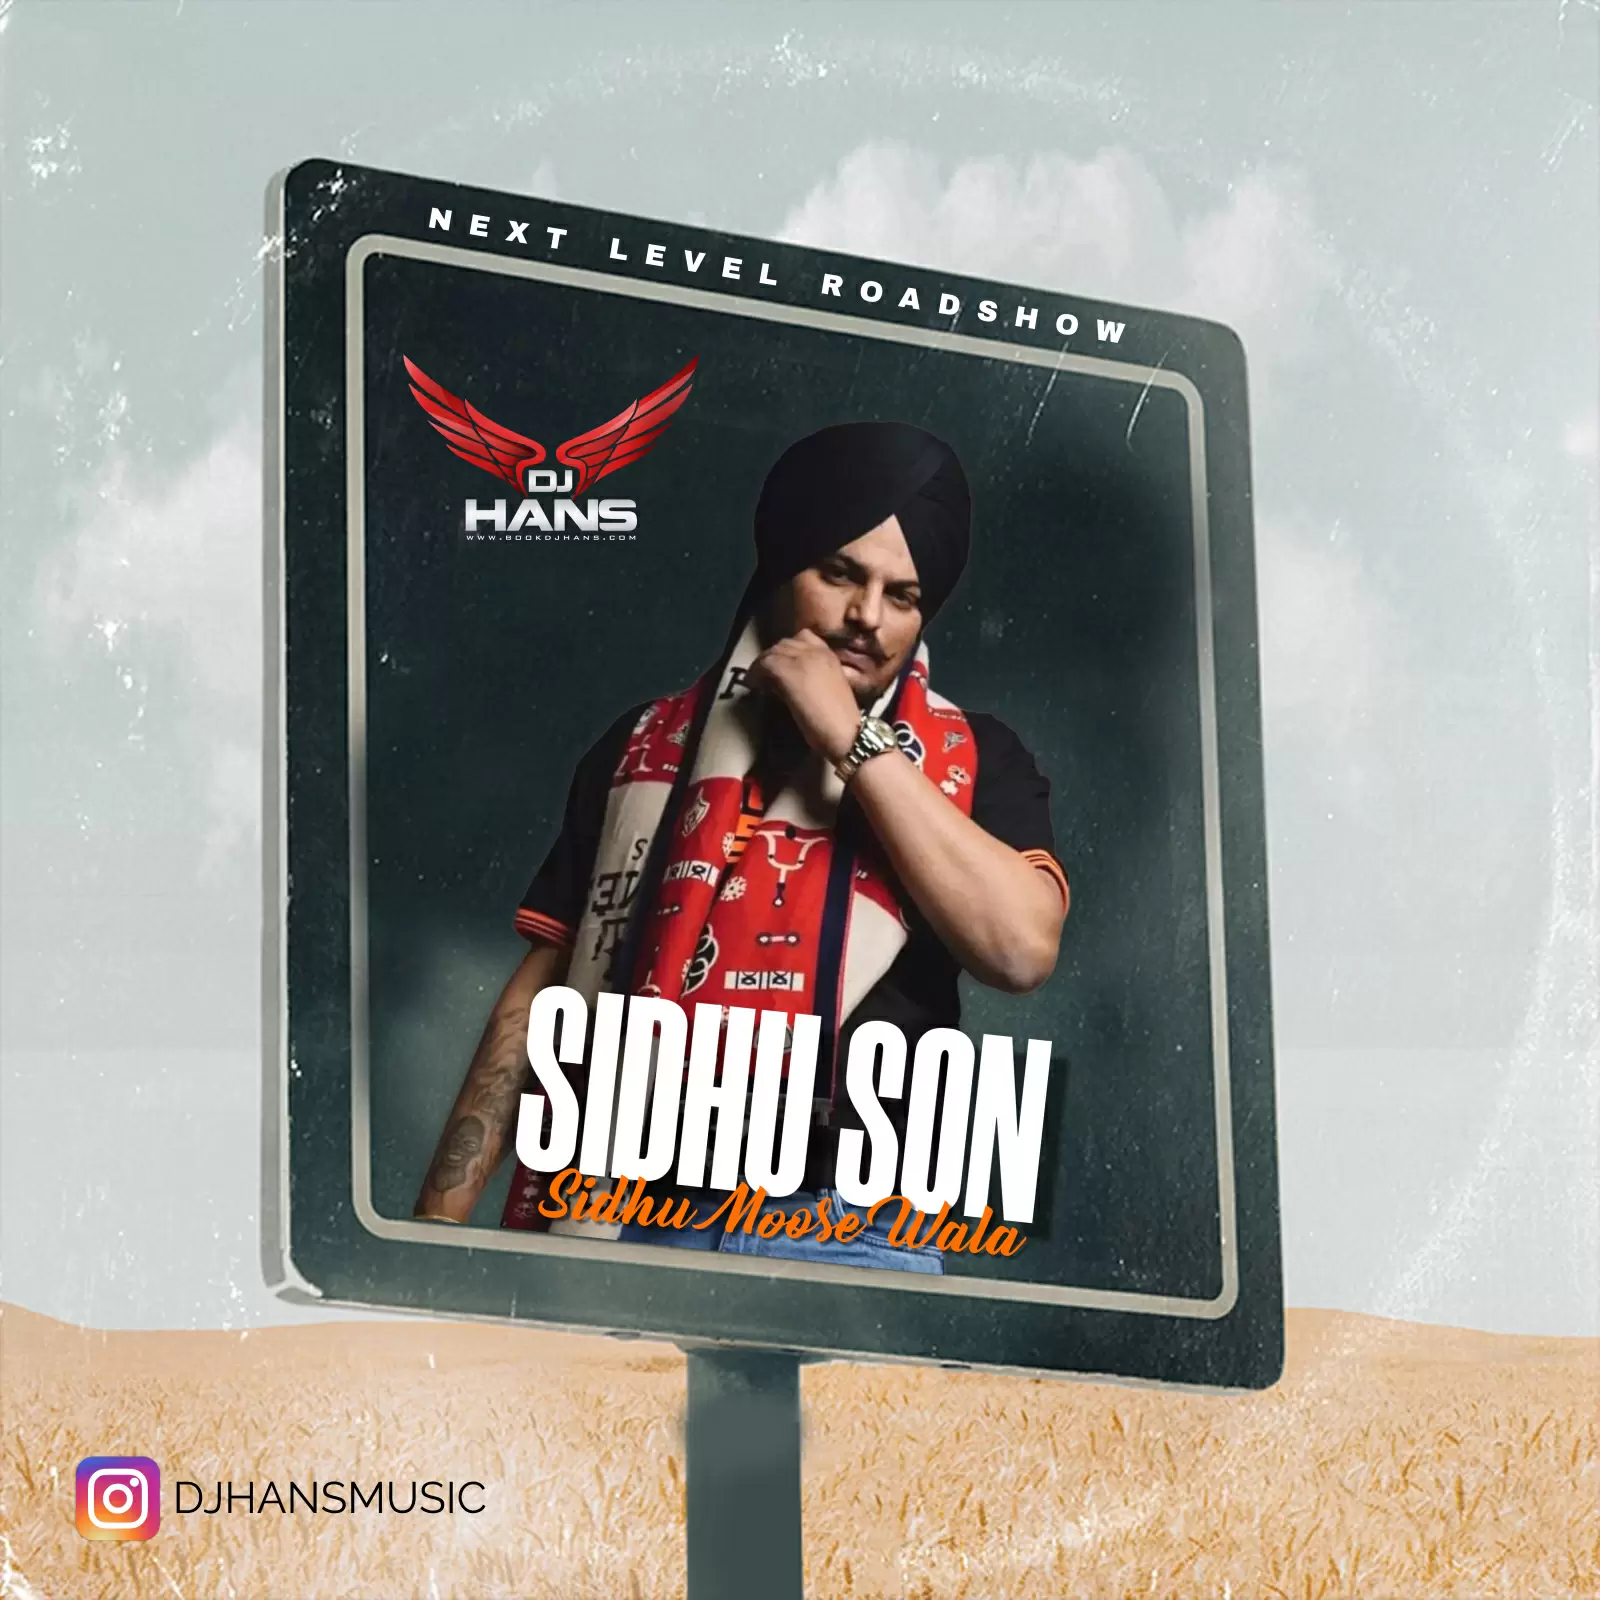 Sidhu Son - Remix - Single Song by Dj Hans - Mr-Punjab